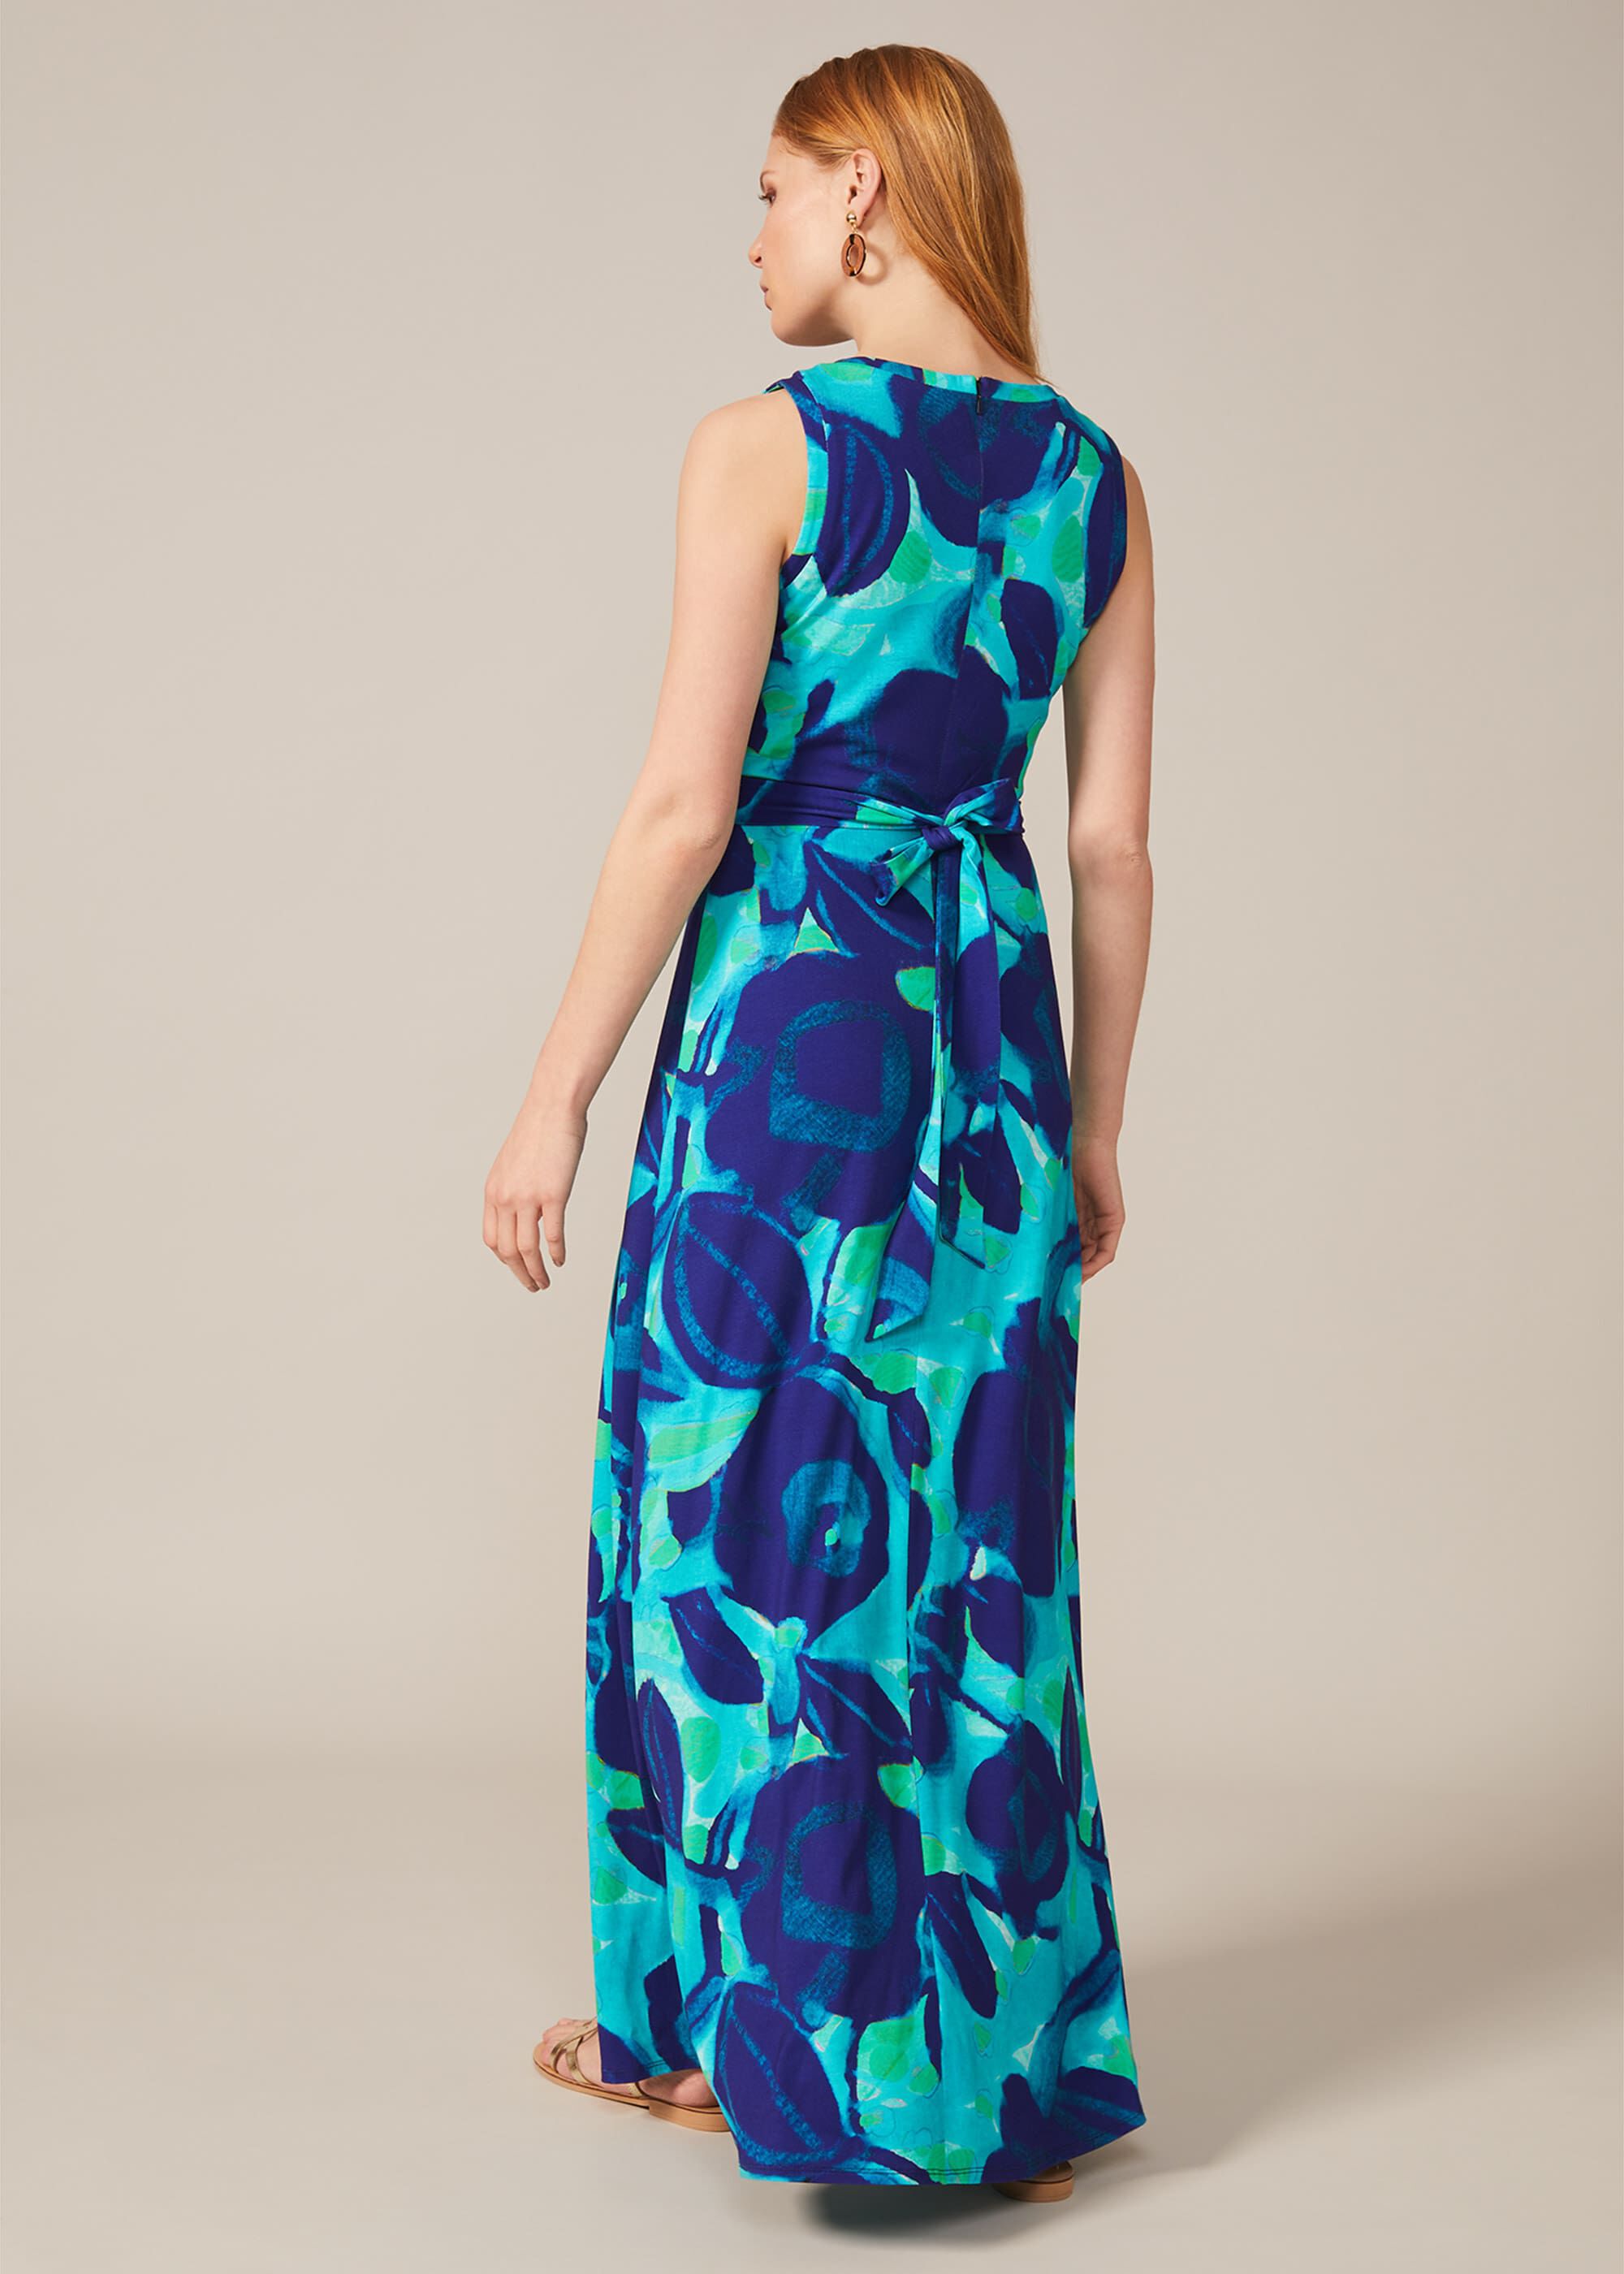 Evalyn Abstract Print Maxi Dress